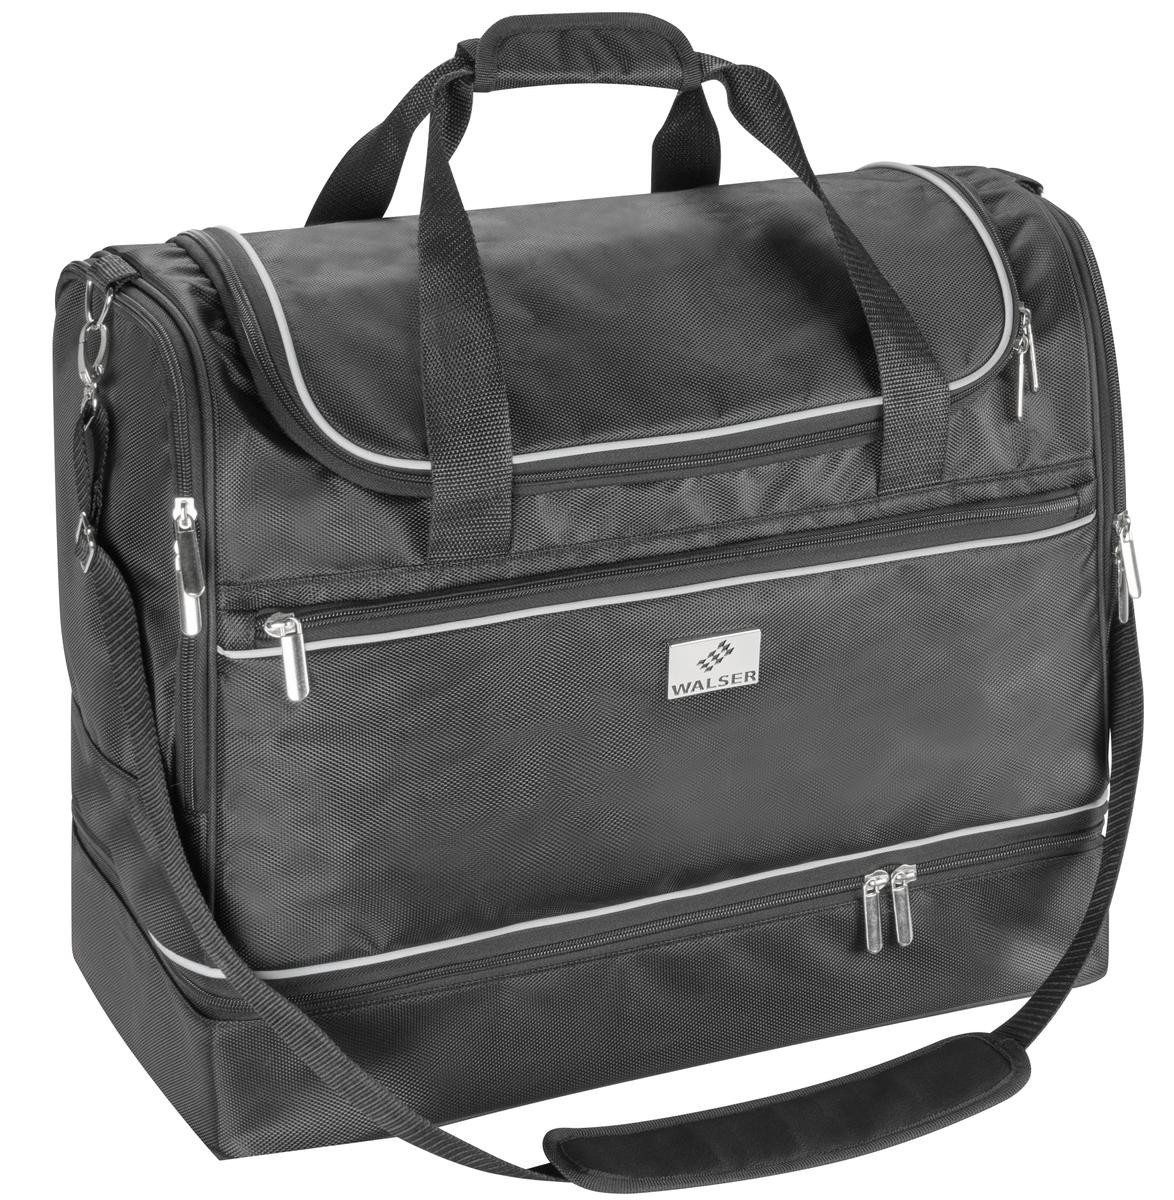 Car boot storage bag WALSER Sports Bag 29976